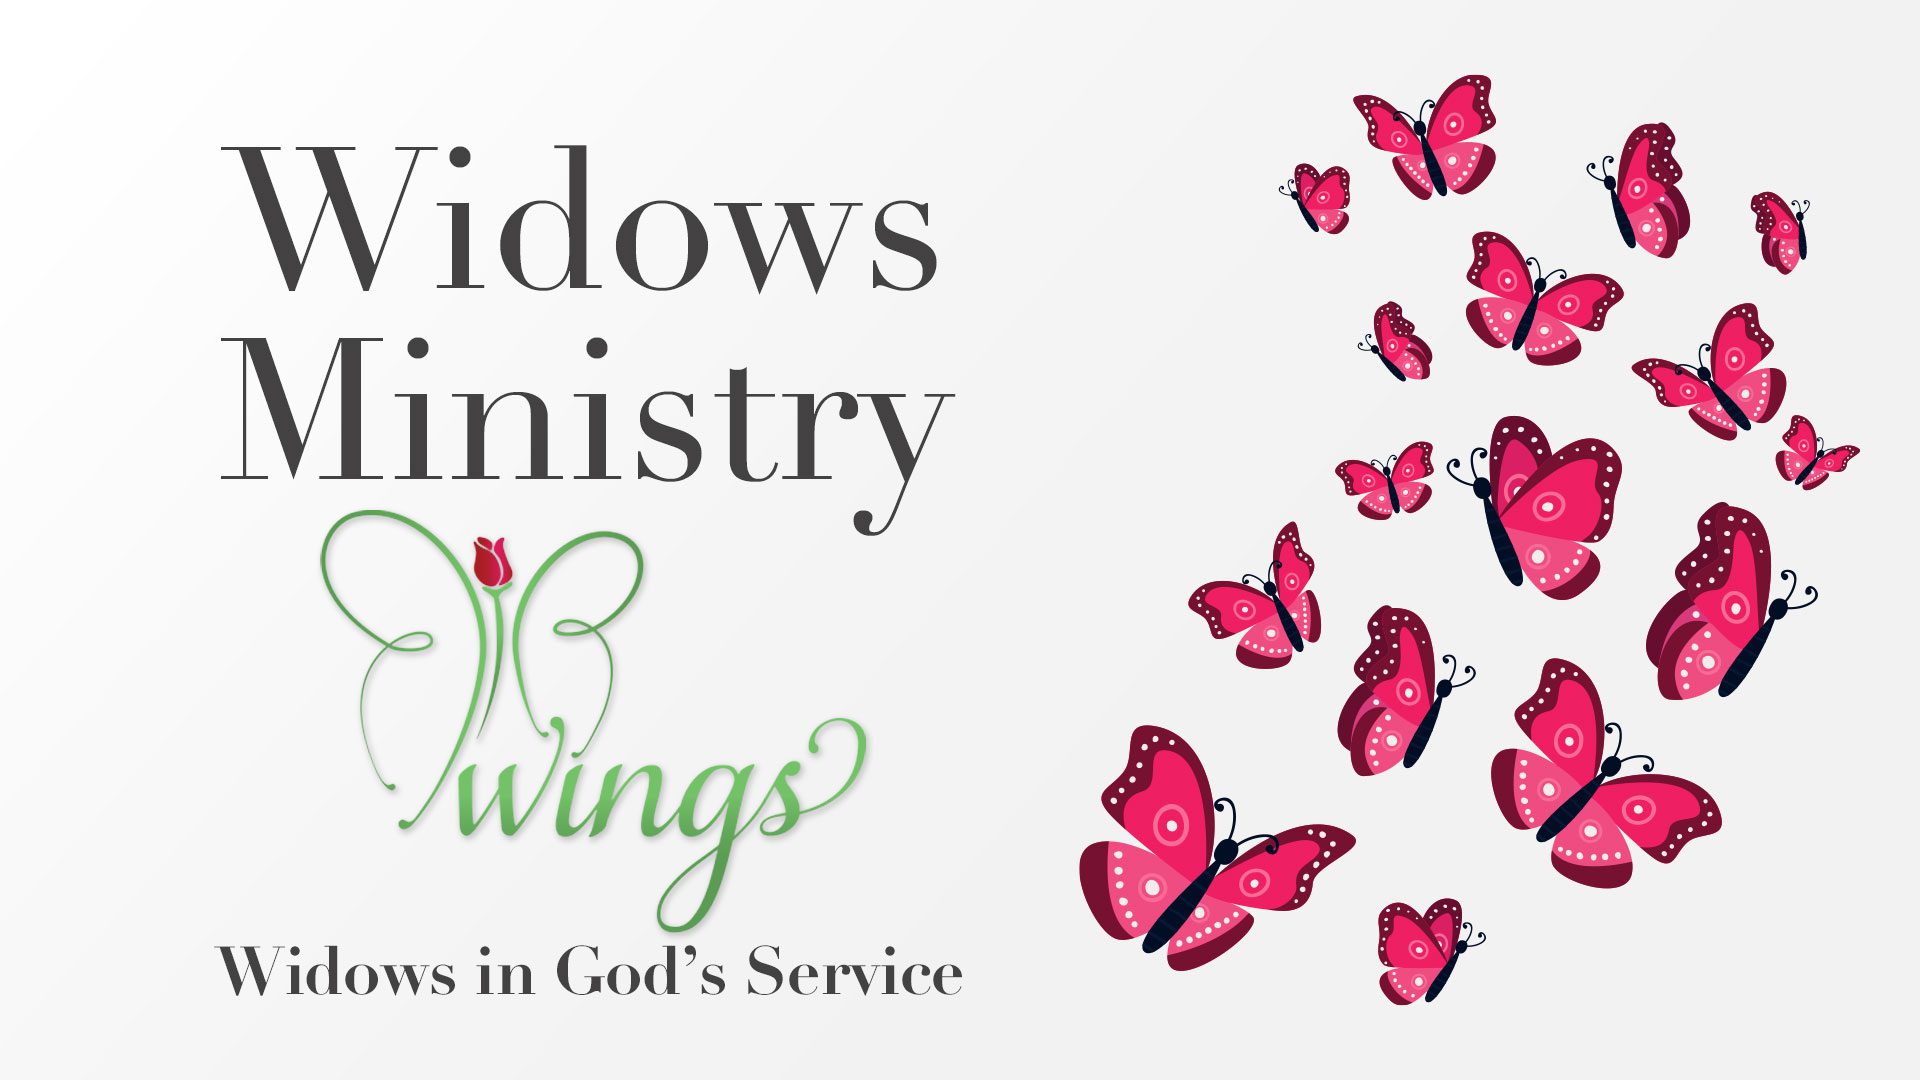 Widows Ministry - W.I.N.G.S. - Widows in God's Service